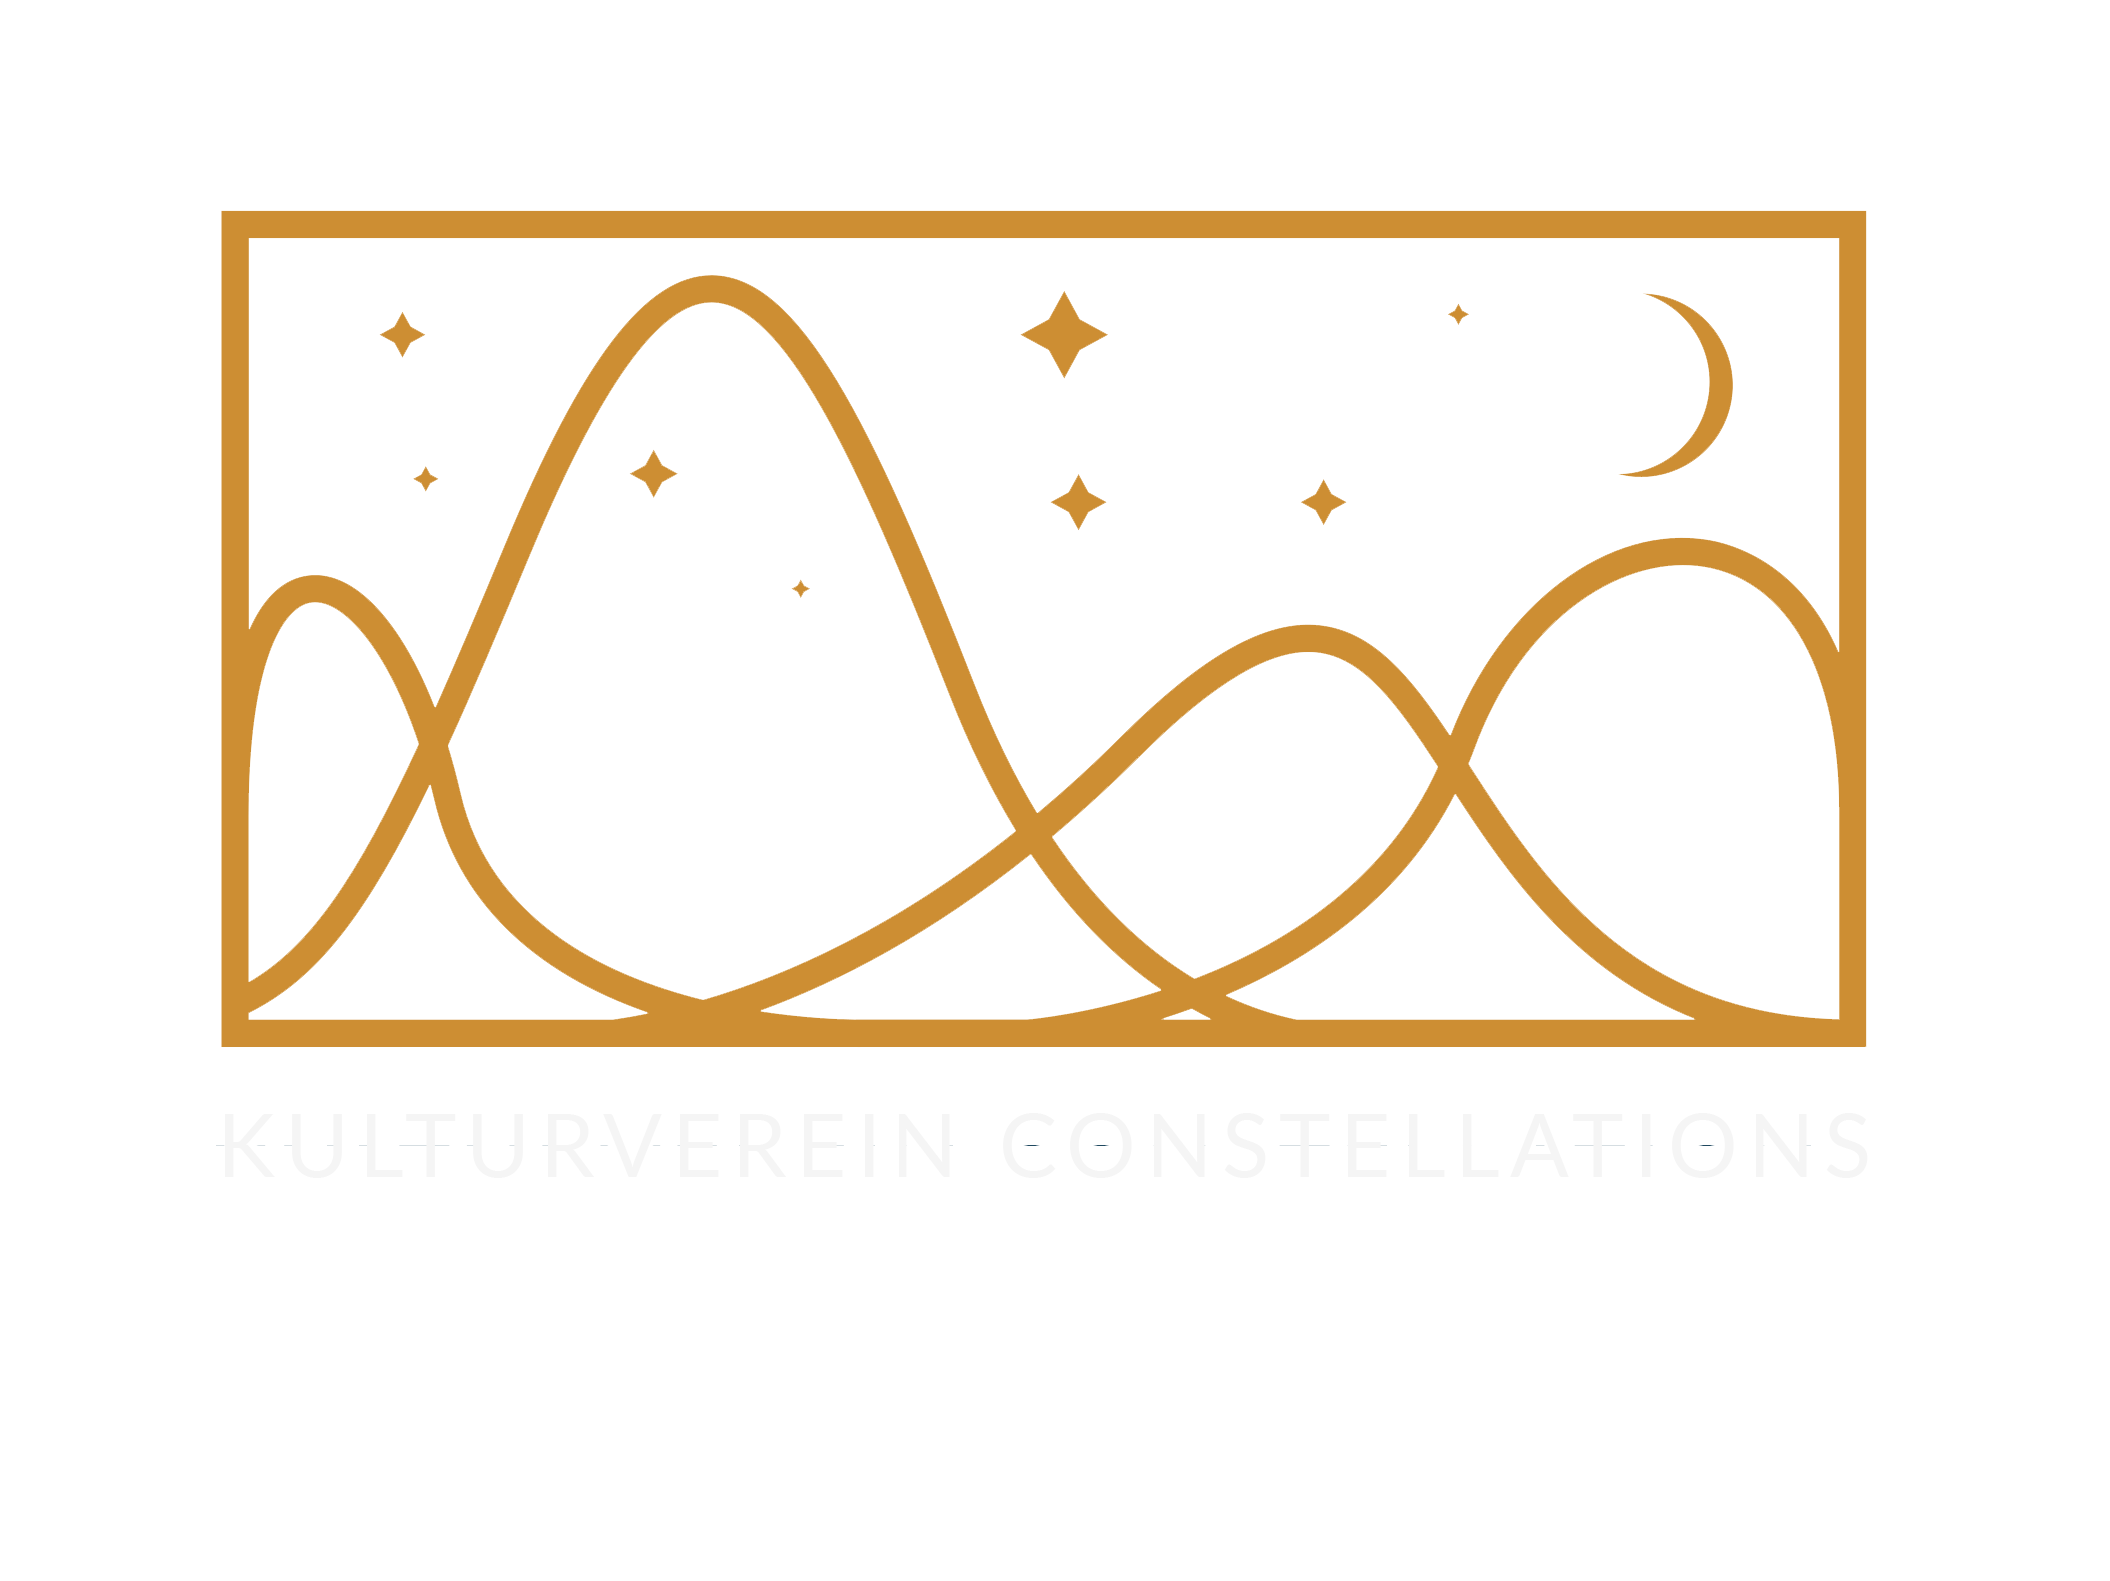 Kulturverein Constellations